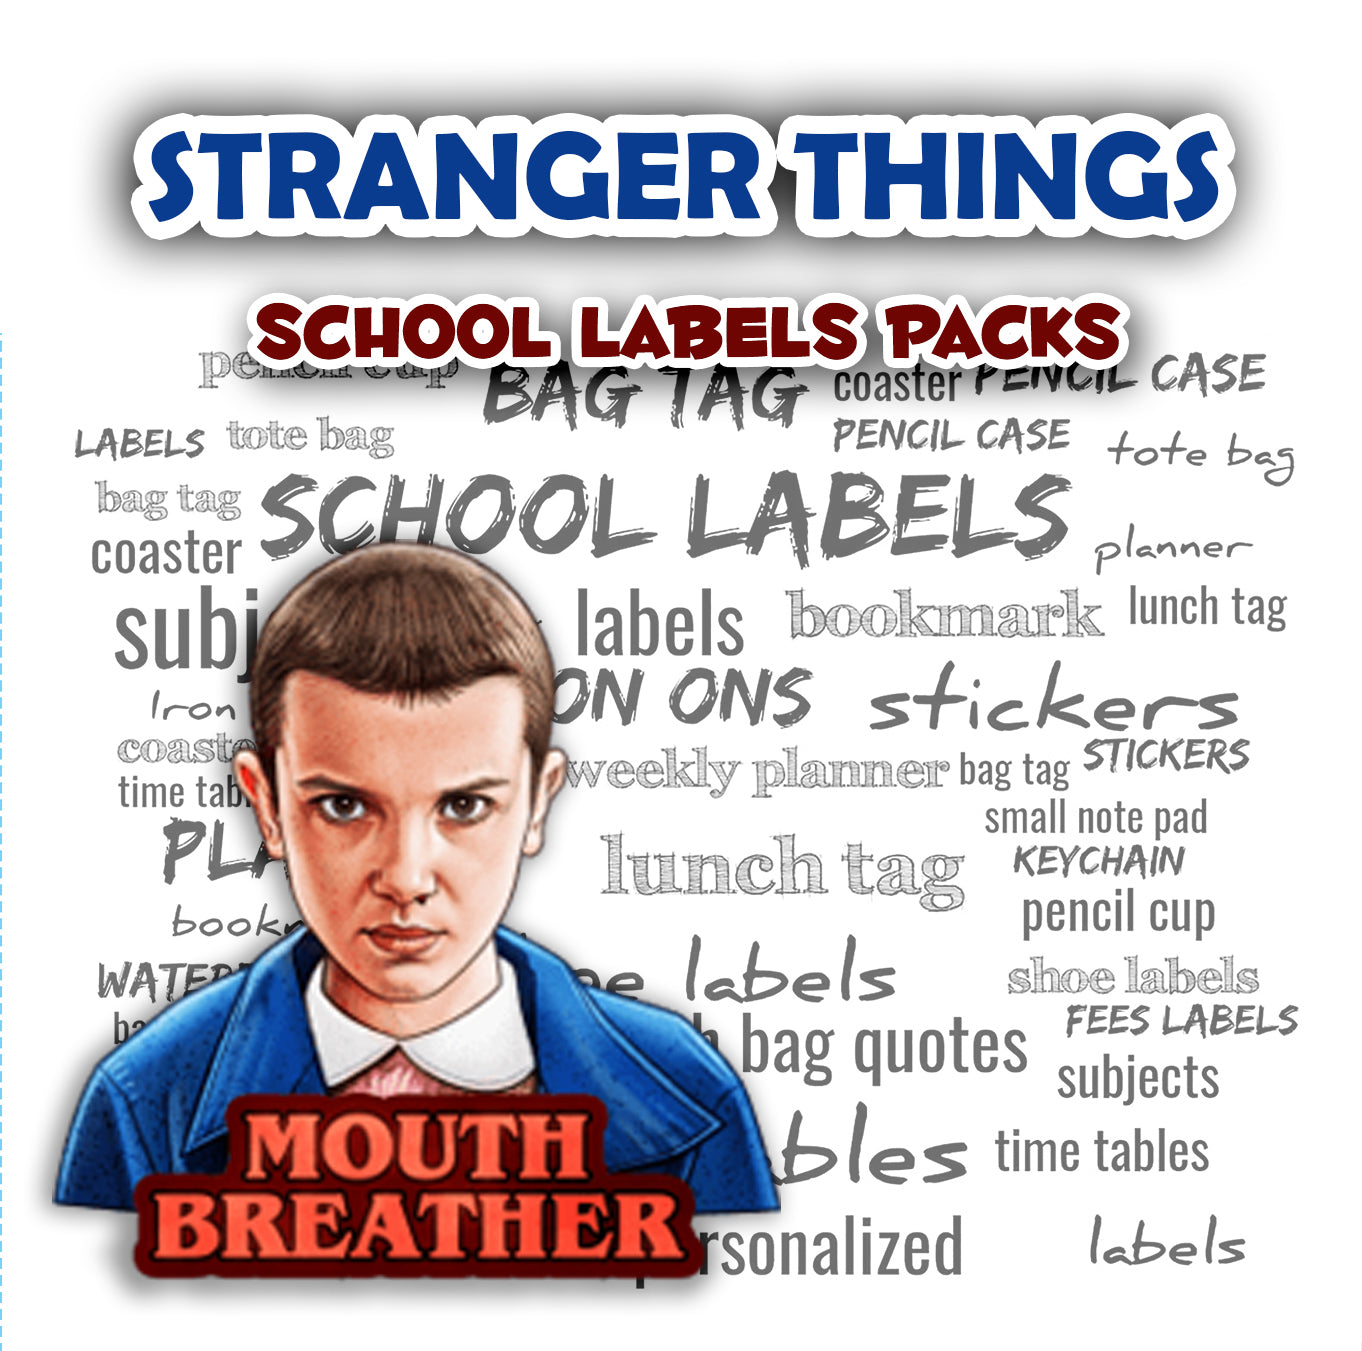 ""Stranger things" School labels packs